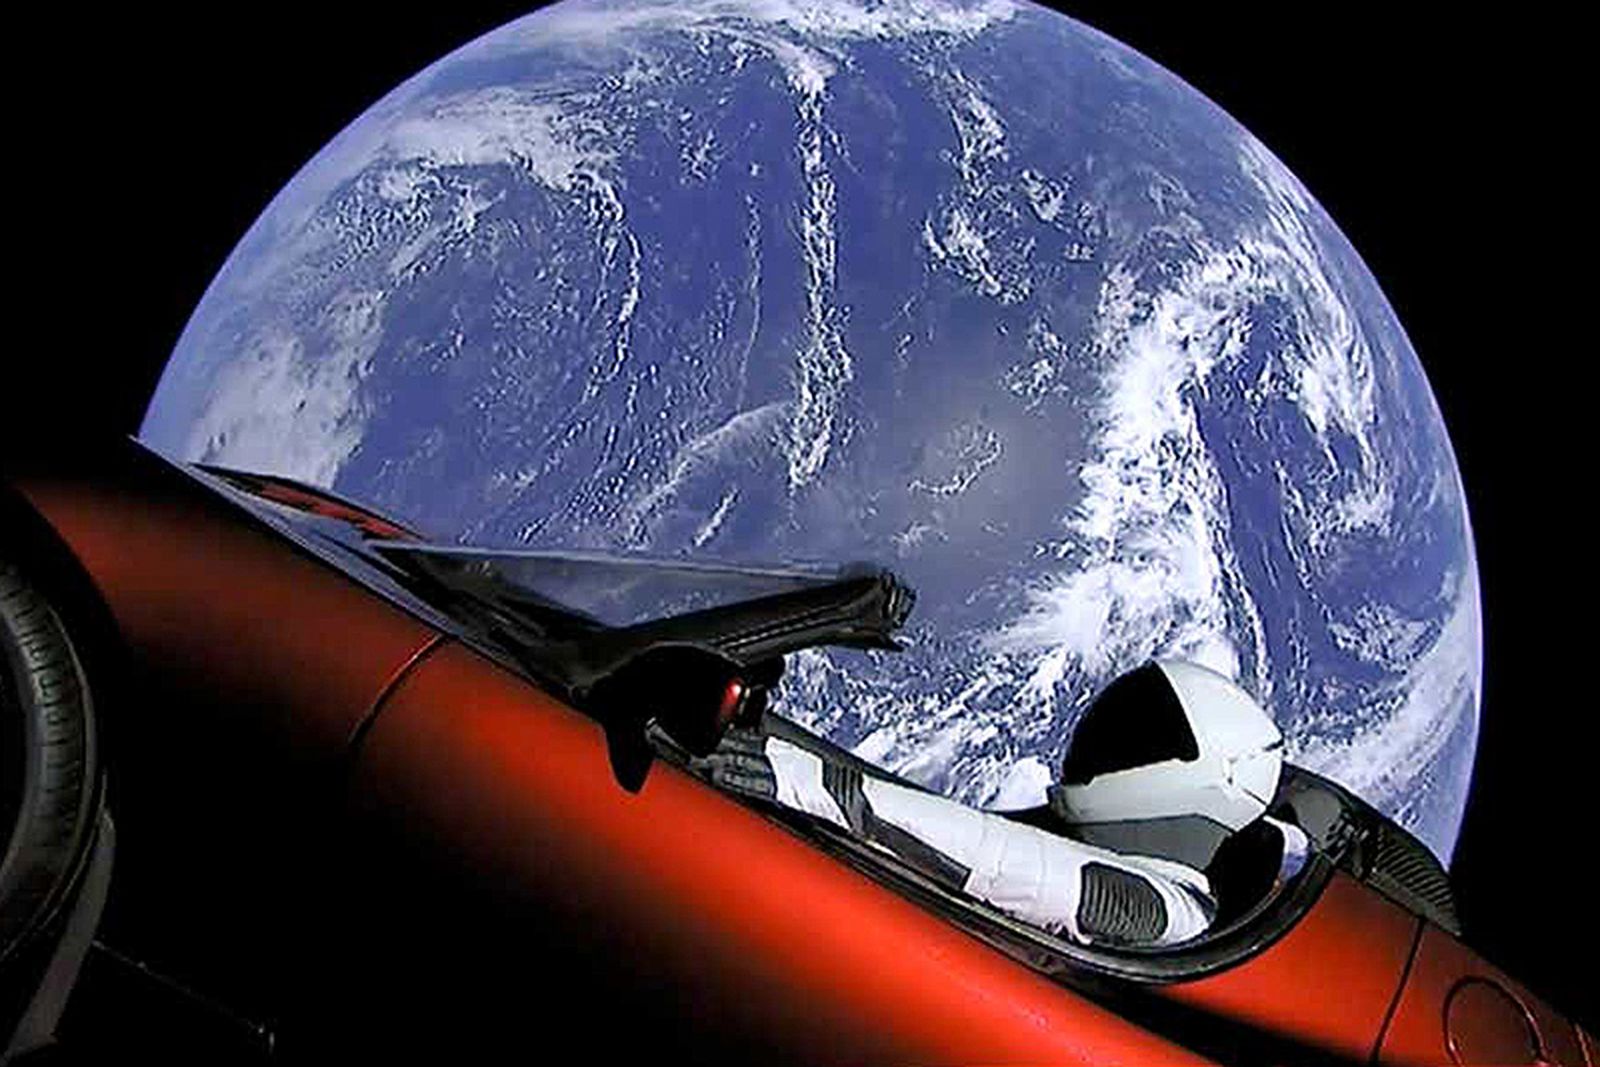 tesla starman roadster first trip around sun Elon Musk SpaceX